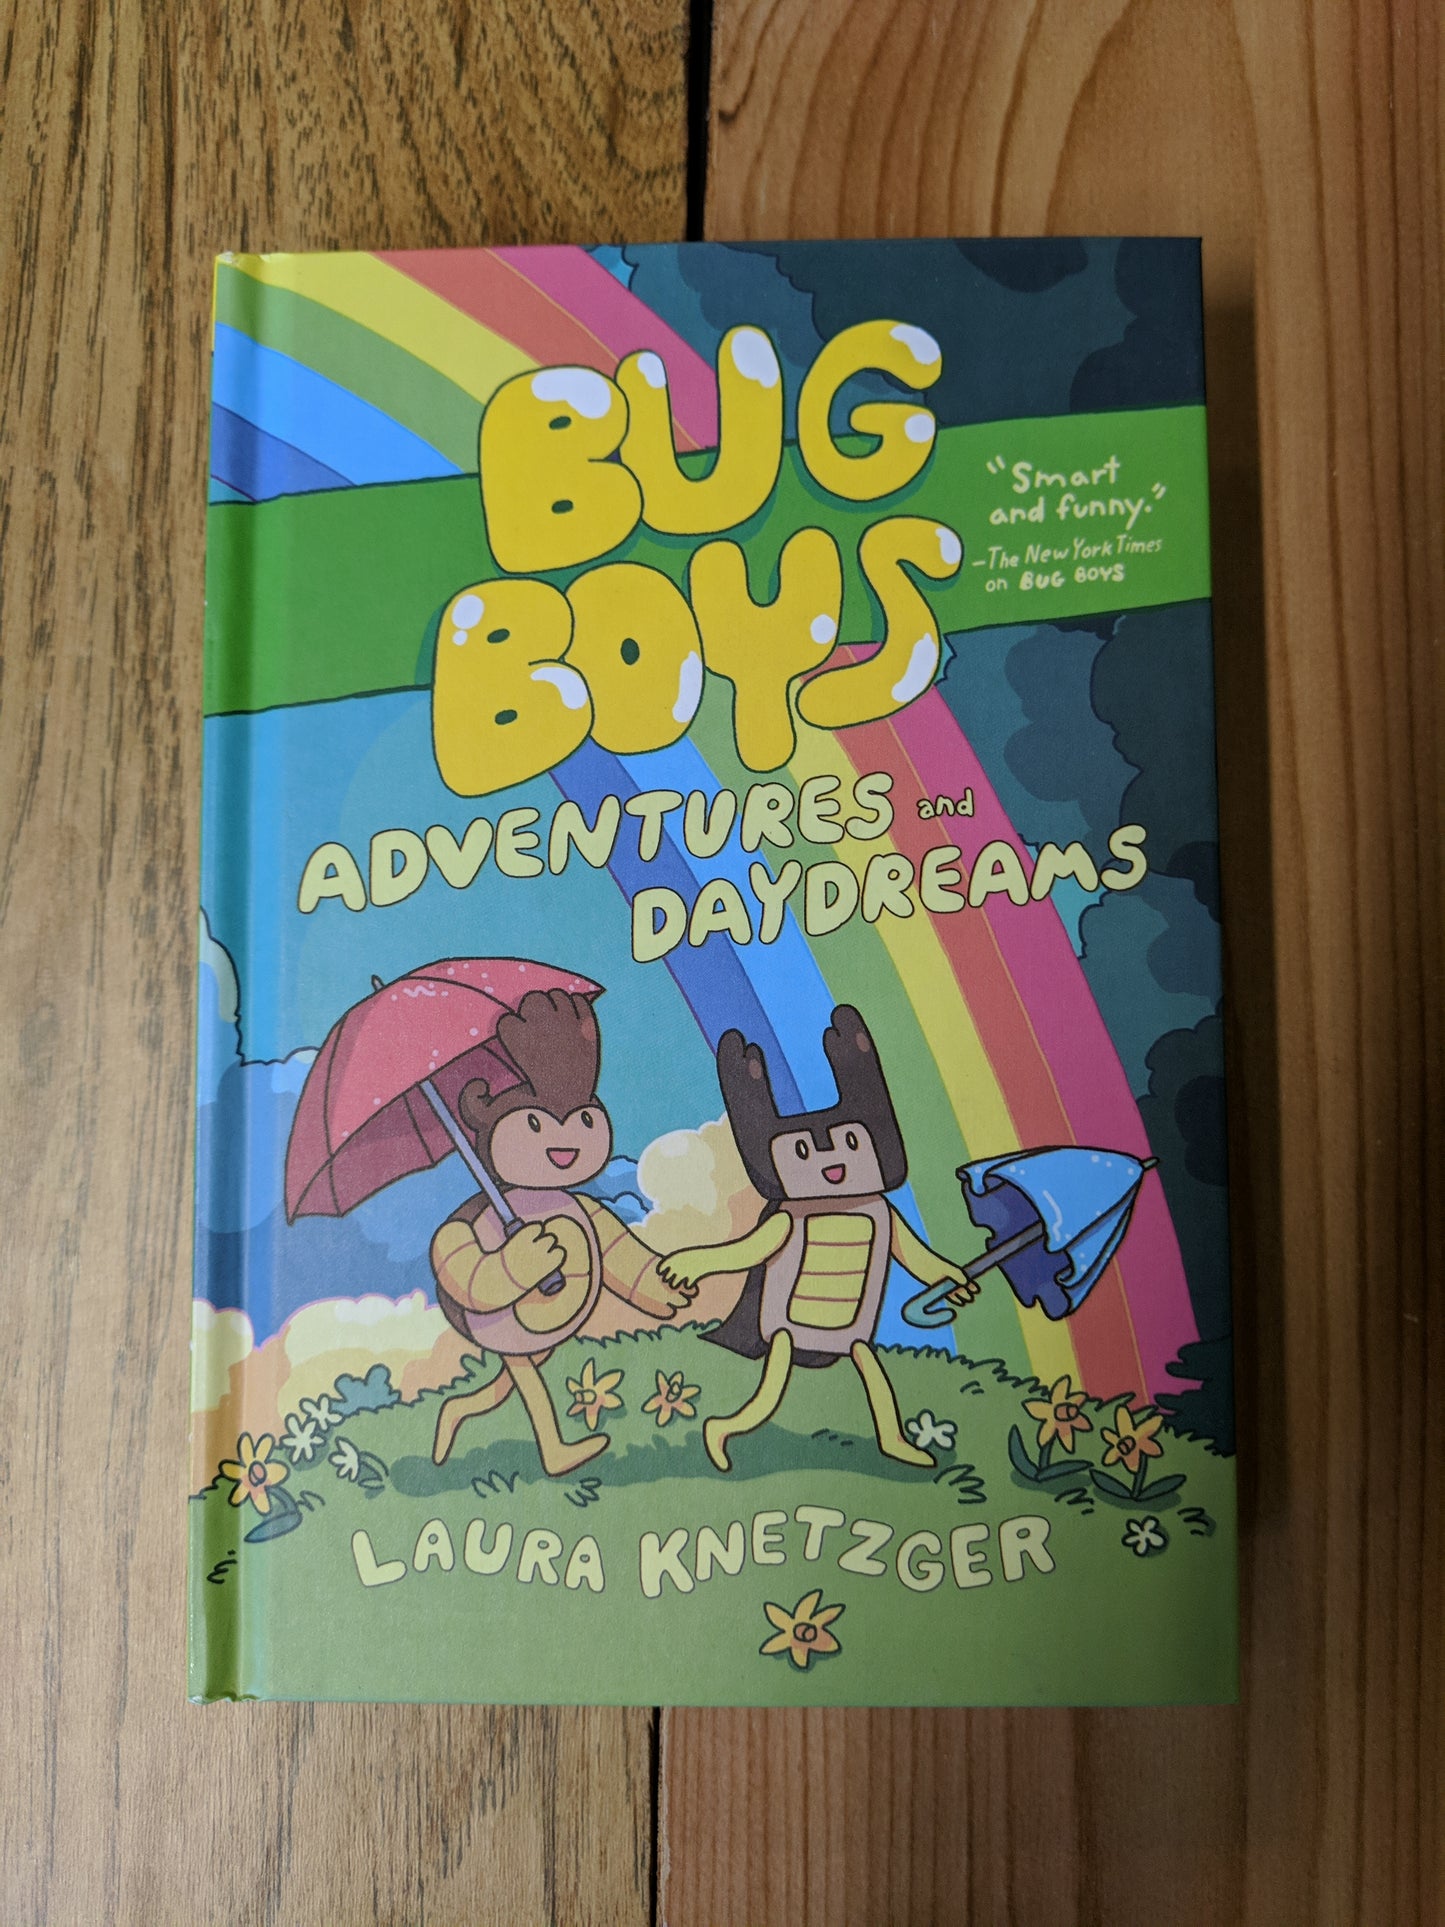 Bug Boys: Adventures and Daydreams (#3)